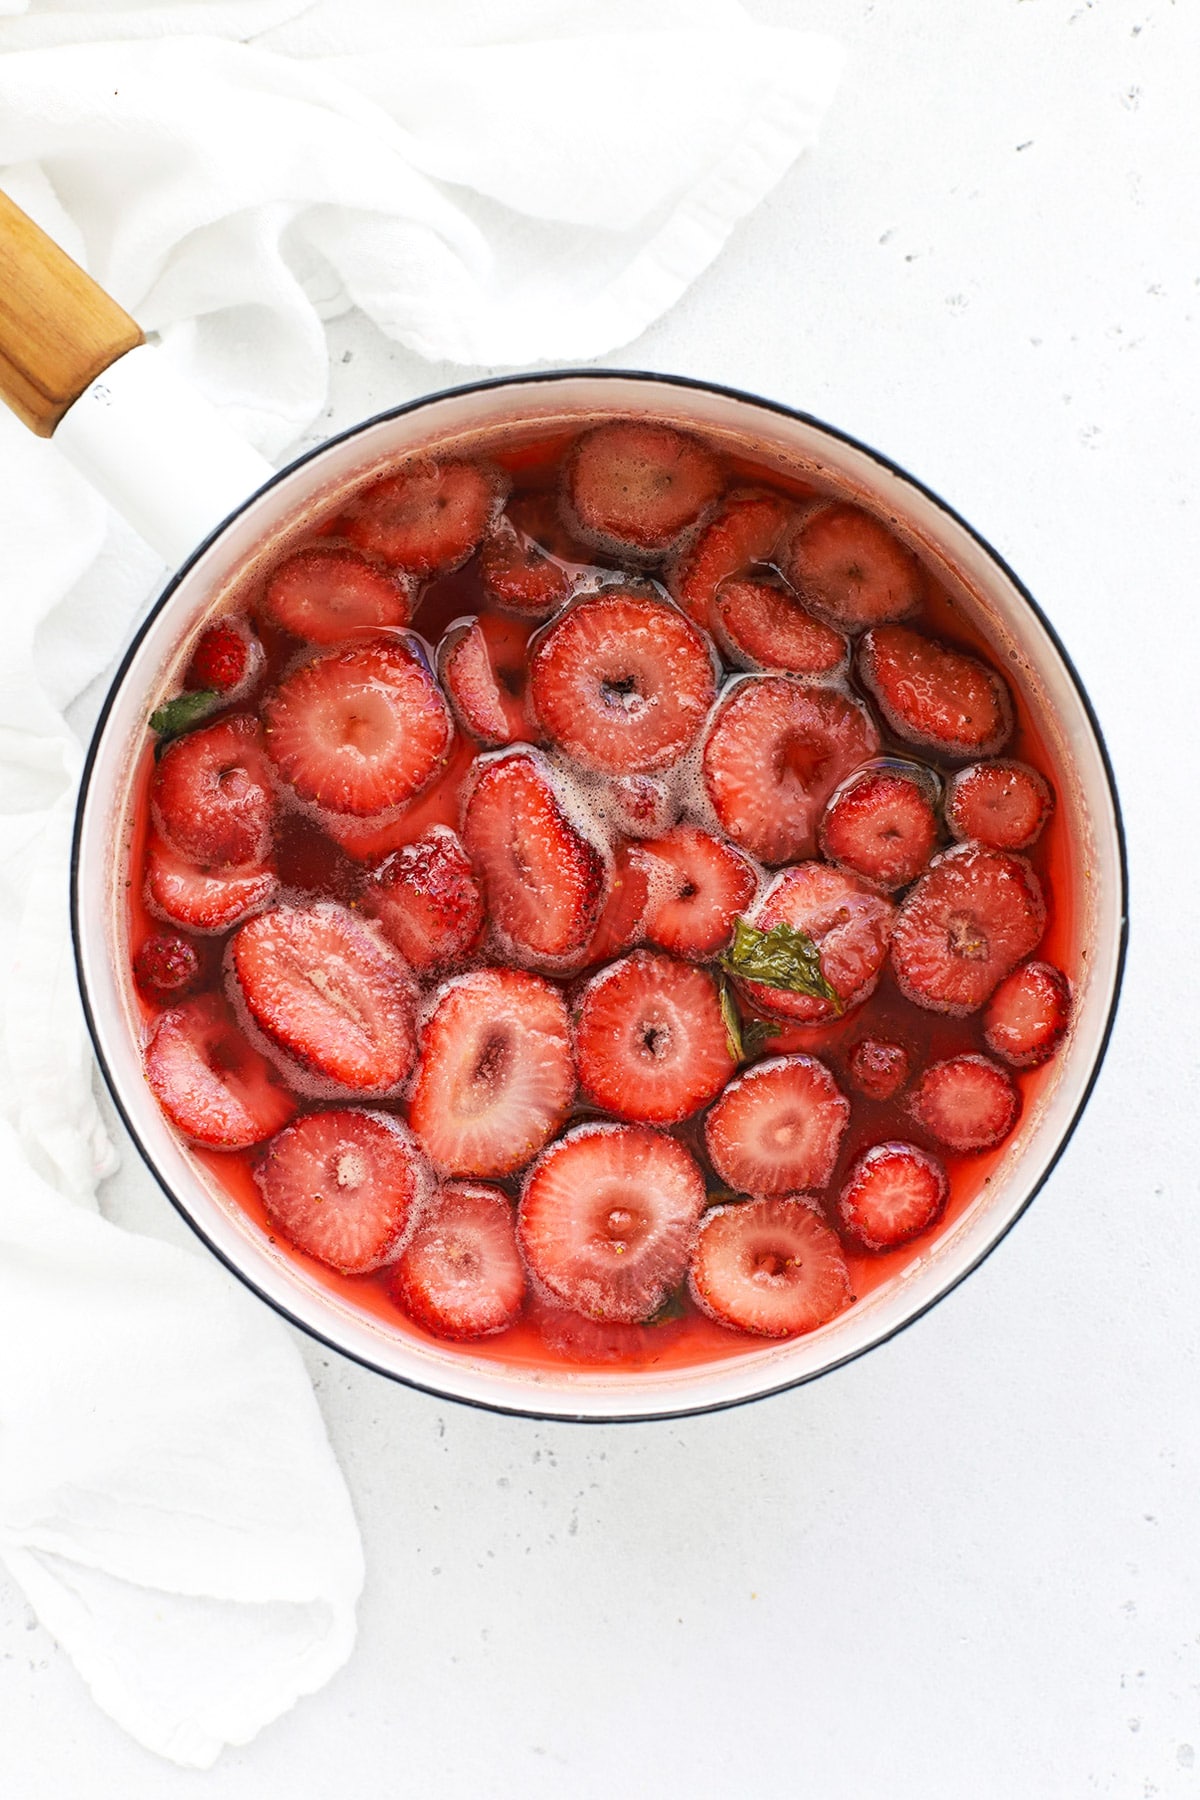 Simmering strawberry basil simple syrup to make strawberry basil lemonade